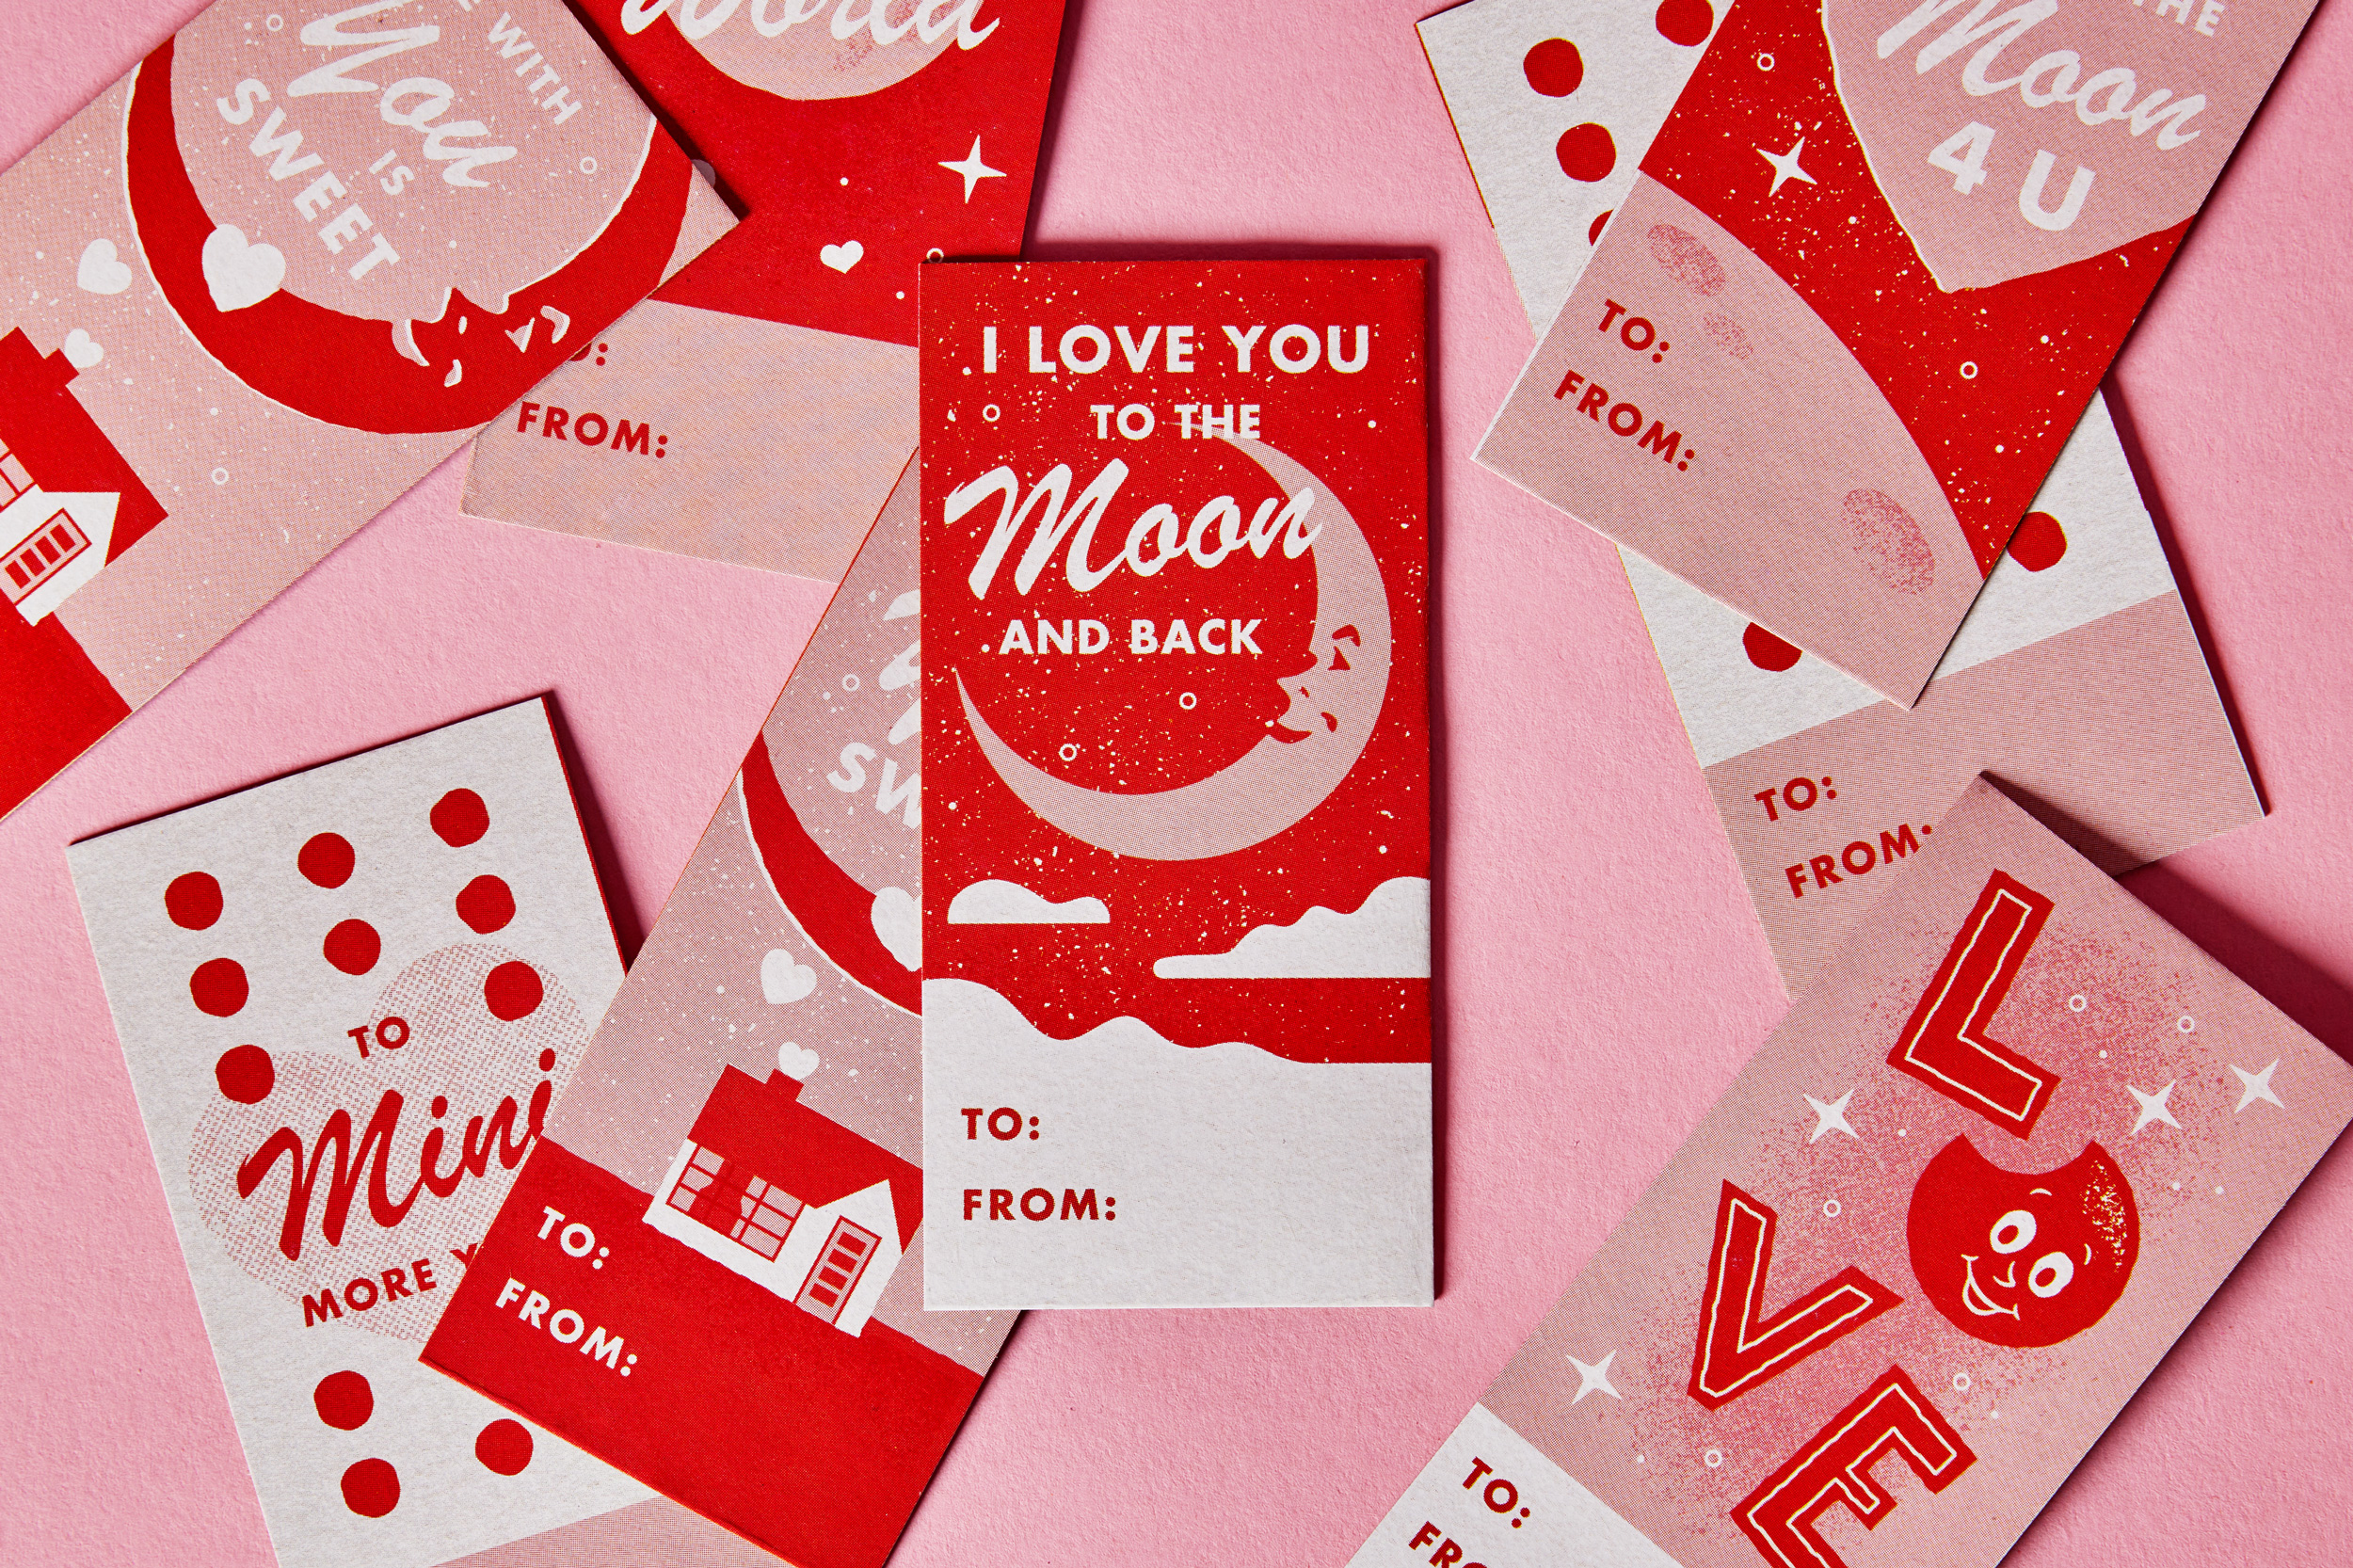 MoonPie's First-Ever Valentine's Day Box Designed By Studio